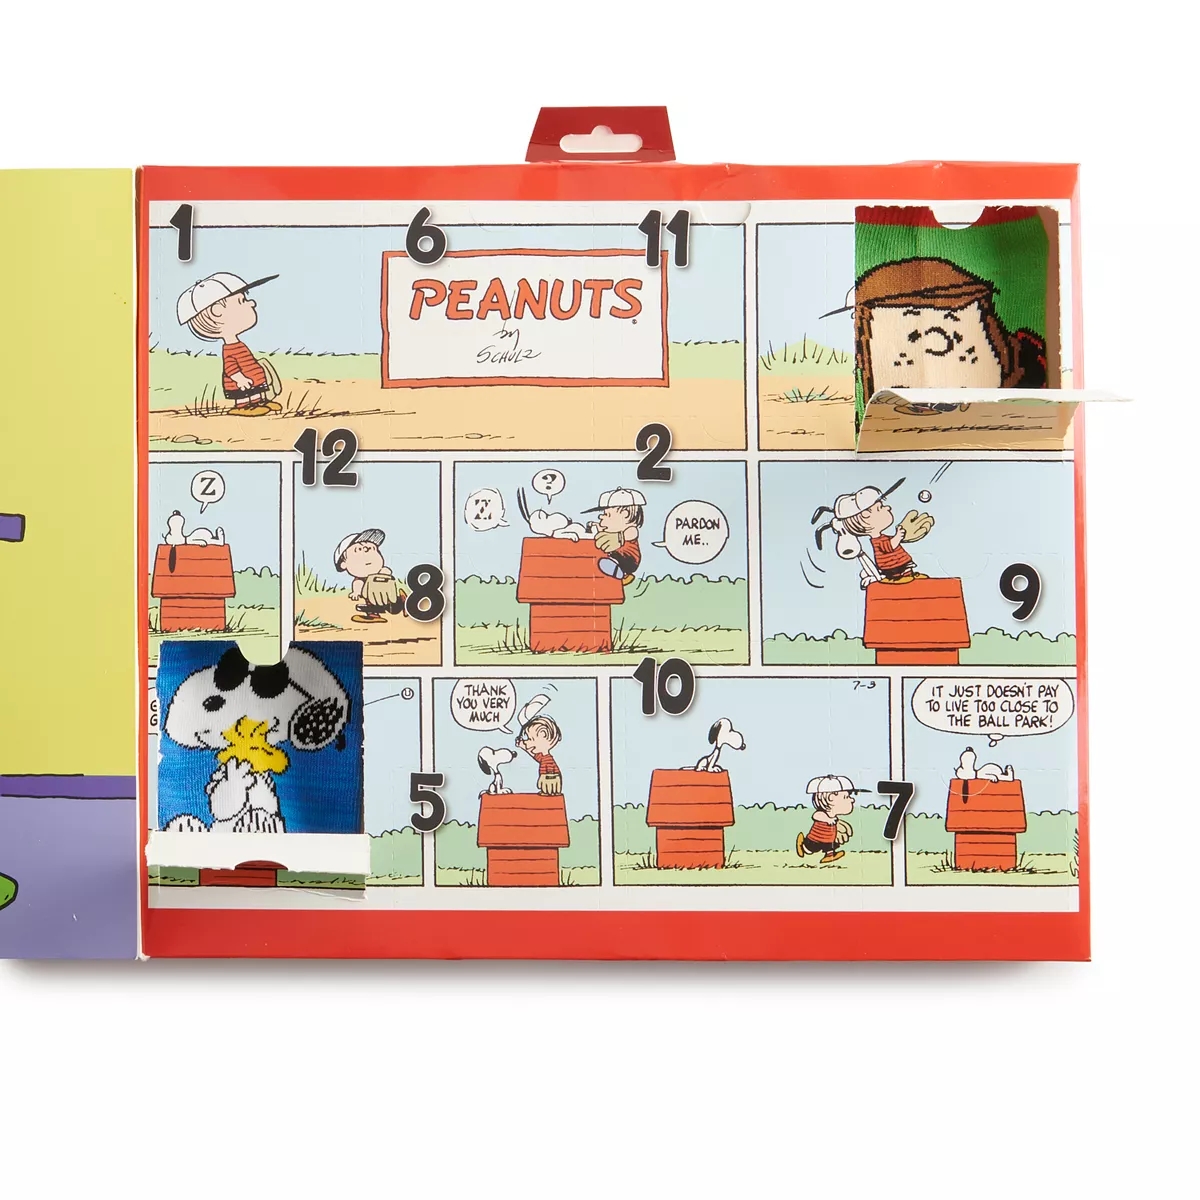 2020 Peanuts Socks Advent Calendars Available Now! {Men's} Hello